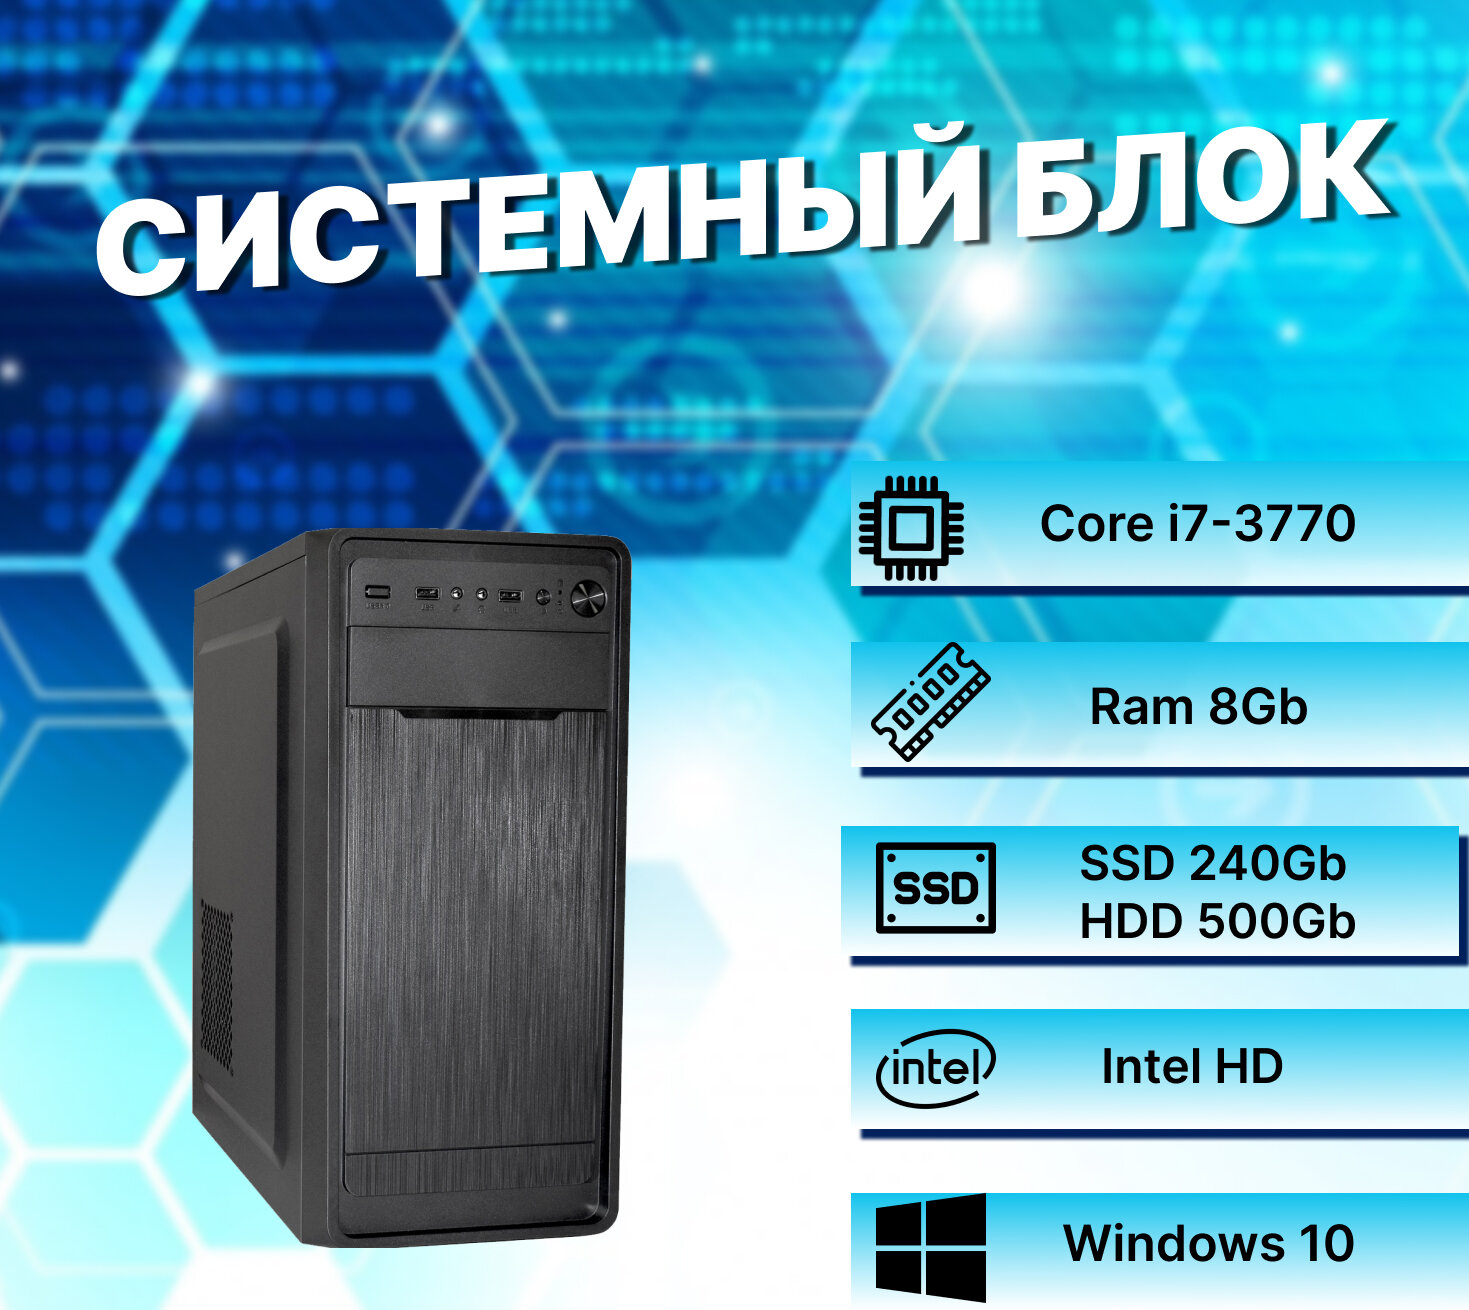 Системный блок Intel Core I7-3770 (3.4ГГц)/ RAM 8Gb/ SSD 240Gb/ HDD 500Gb/ Intel HD/ Windows 10 Pro